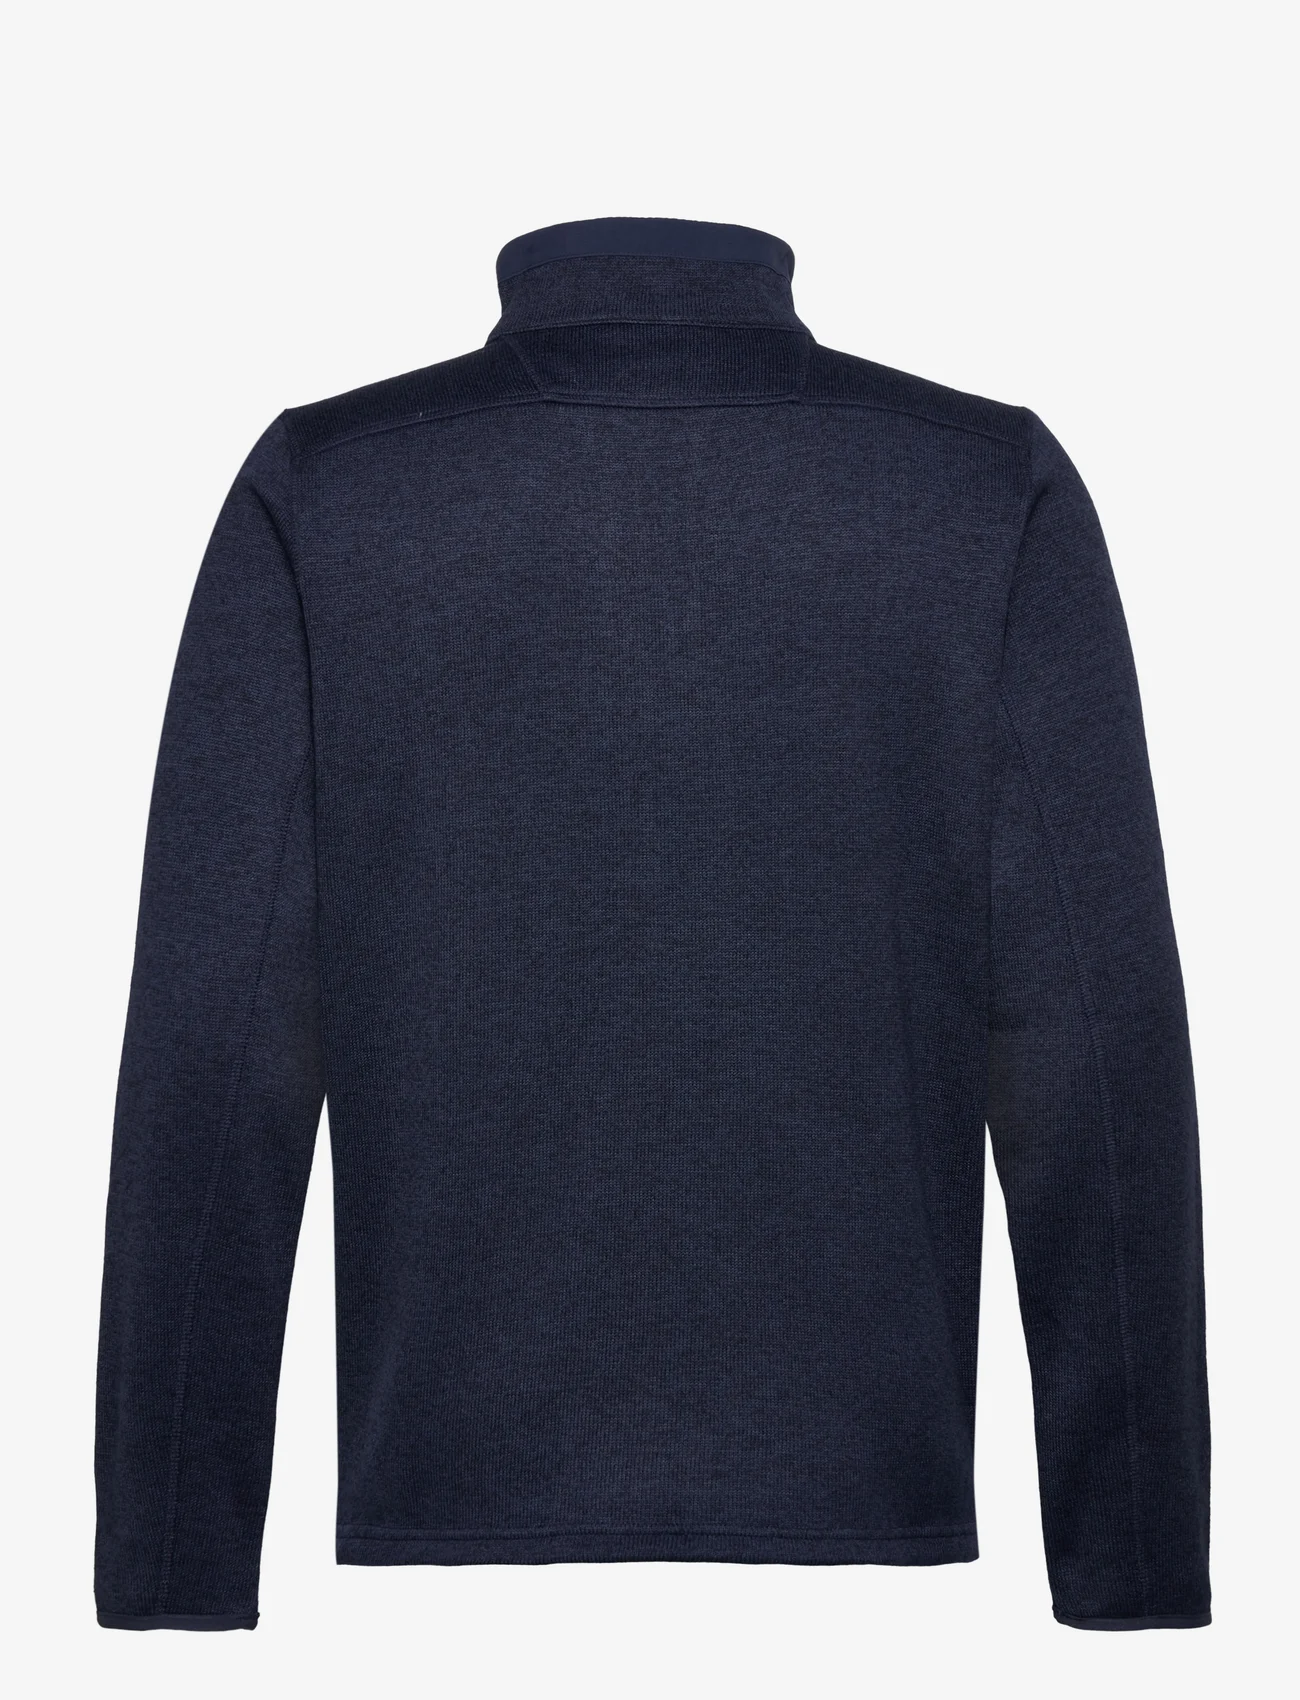 Columbia Sportswear - Sweater Weather Full Zip - mellanlager - collegiate navy heather - 1